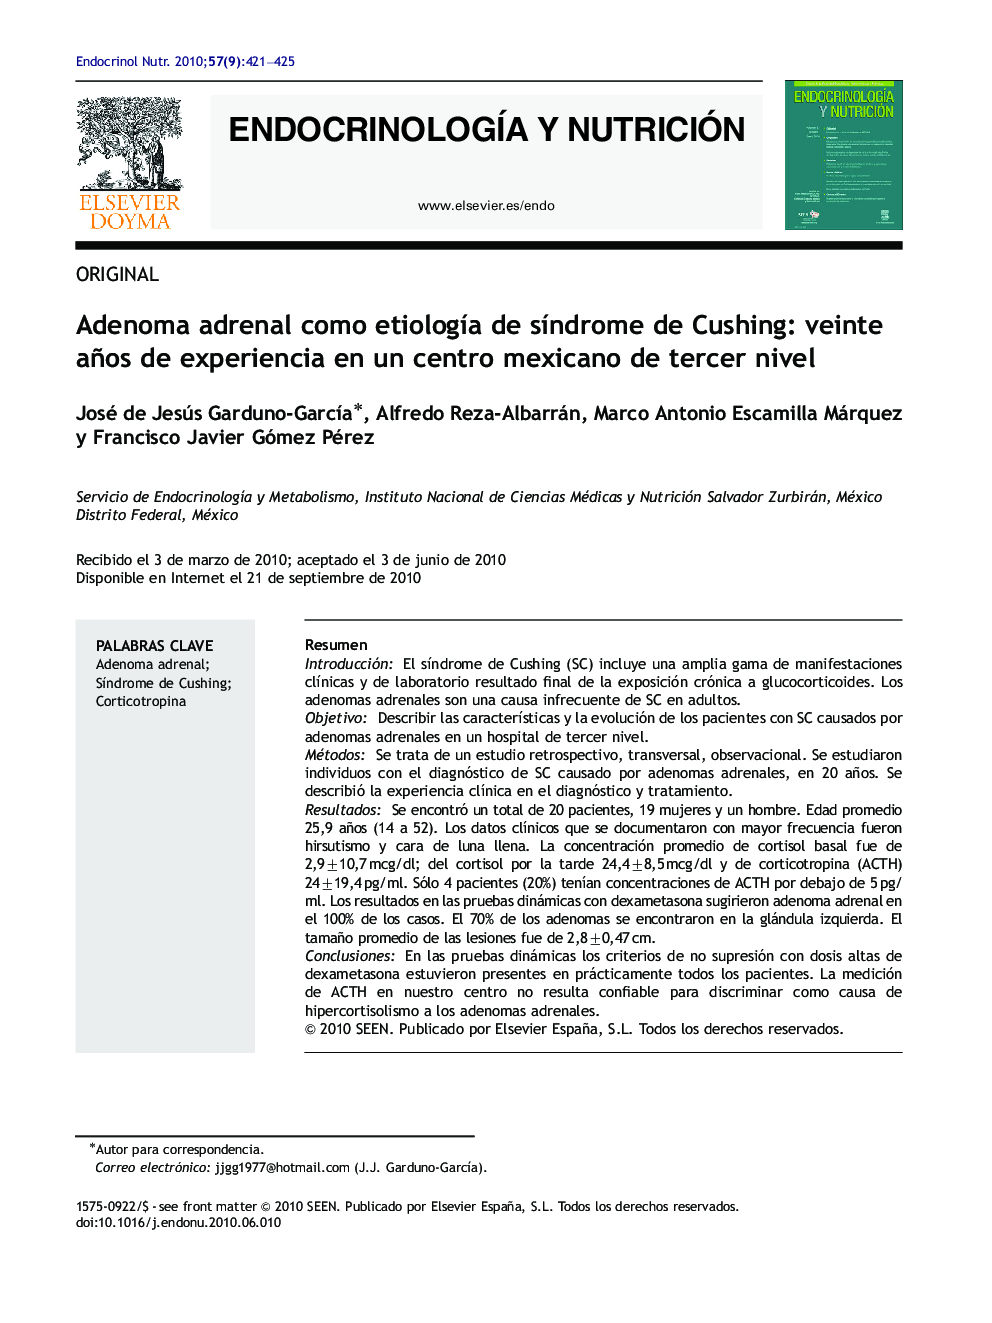 Adenoma adrenal como etiología de síndrome de Cushing: veinte años de experiencia en un centro mexicano de tercer nivel